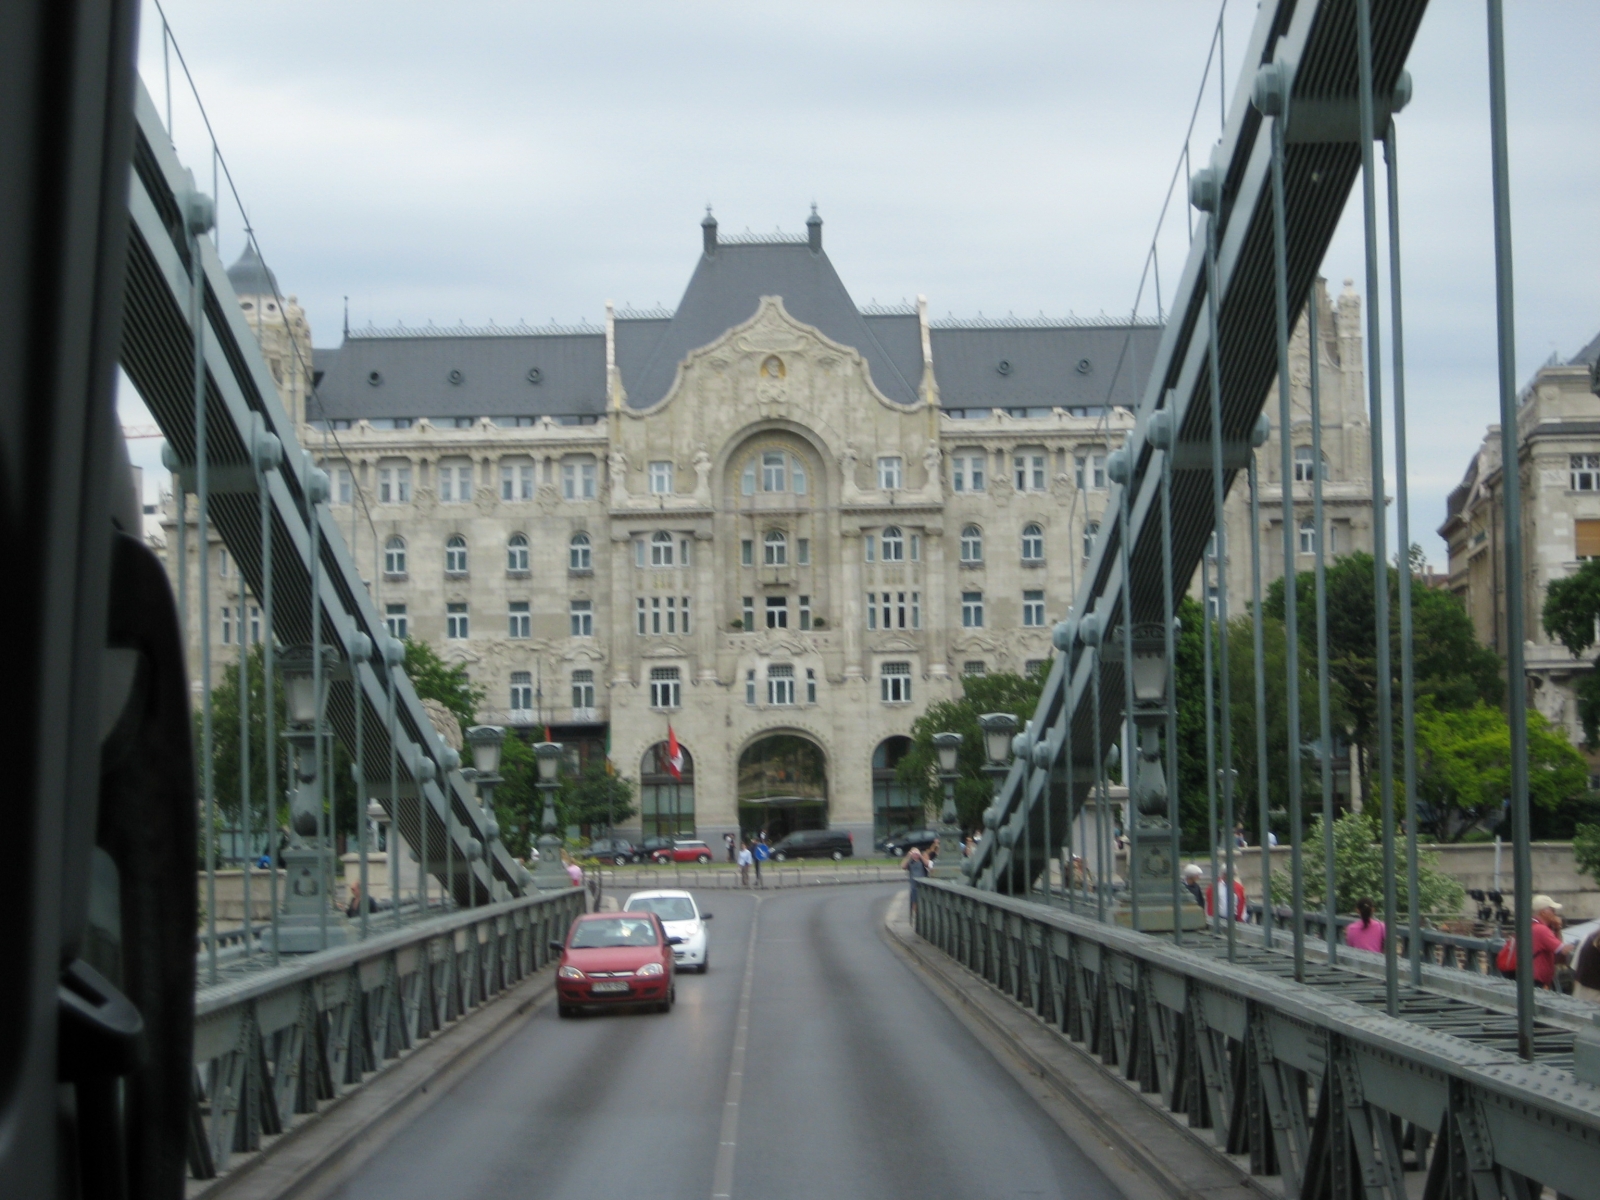 Four Seasons Hotel seen from Chain Bridge, Budapest, Hungary